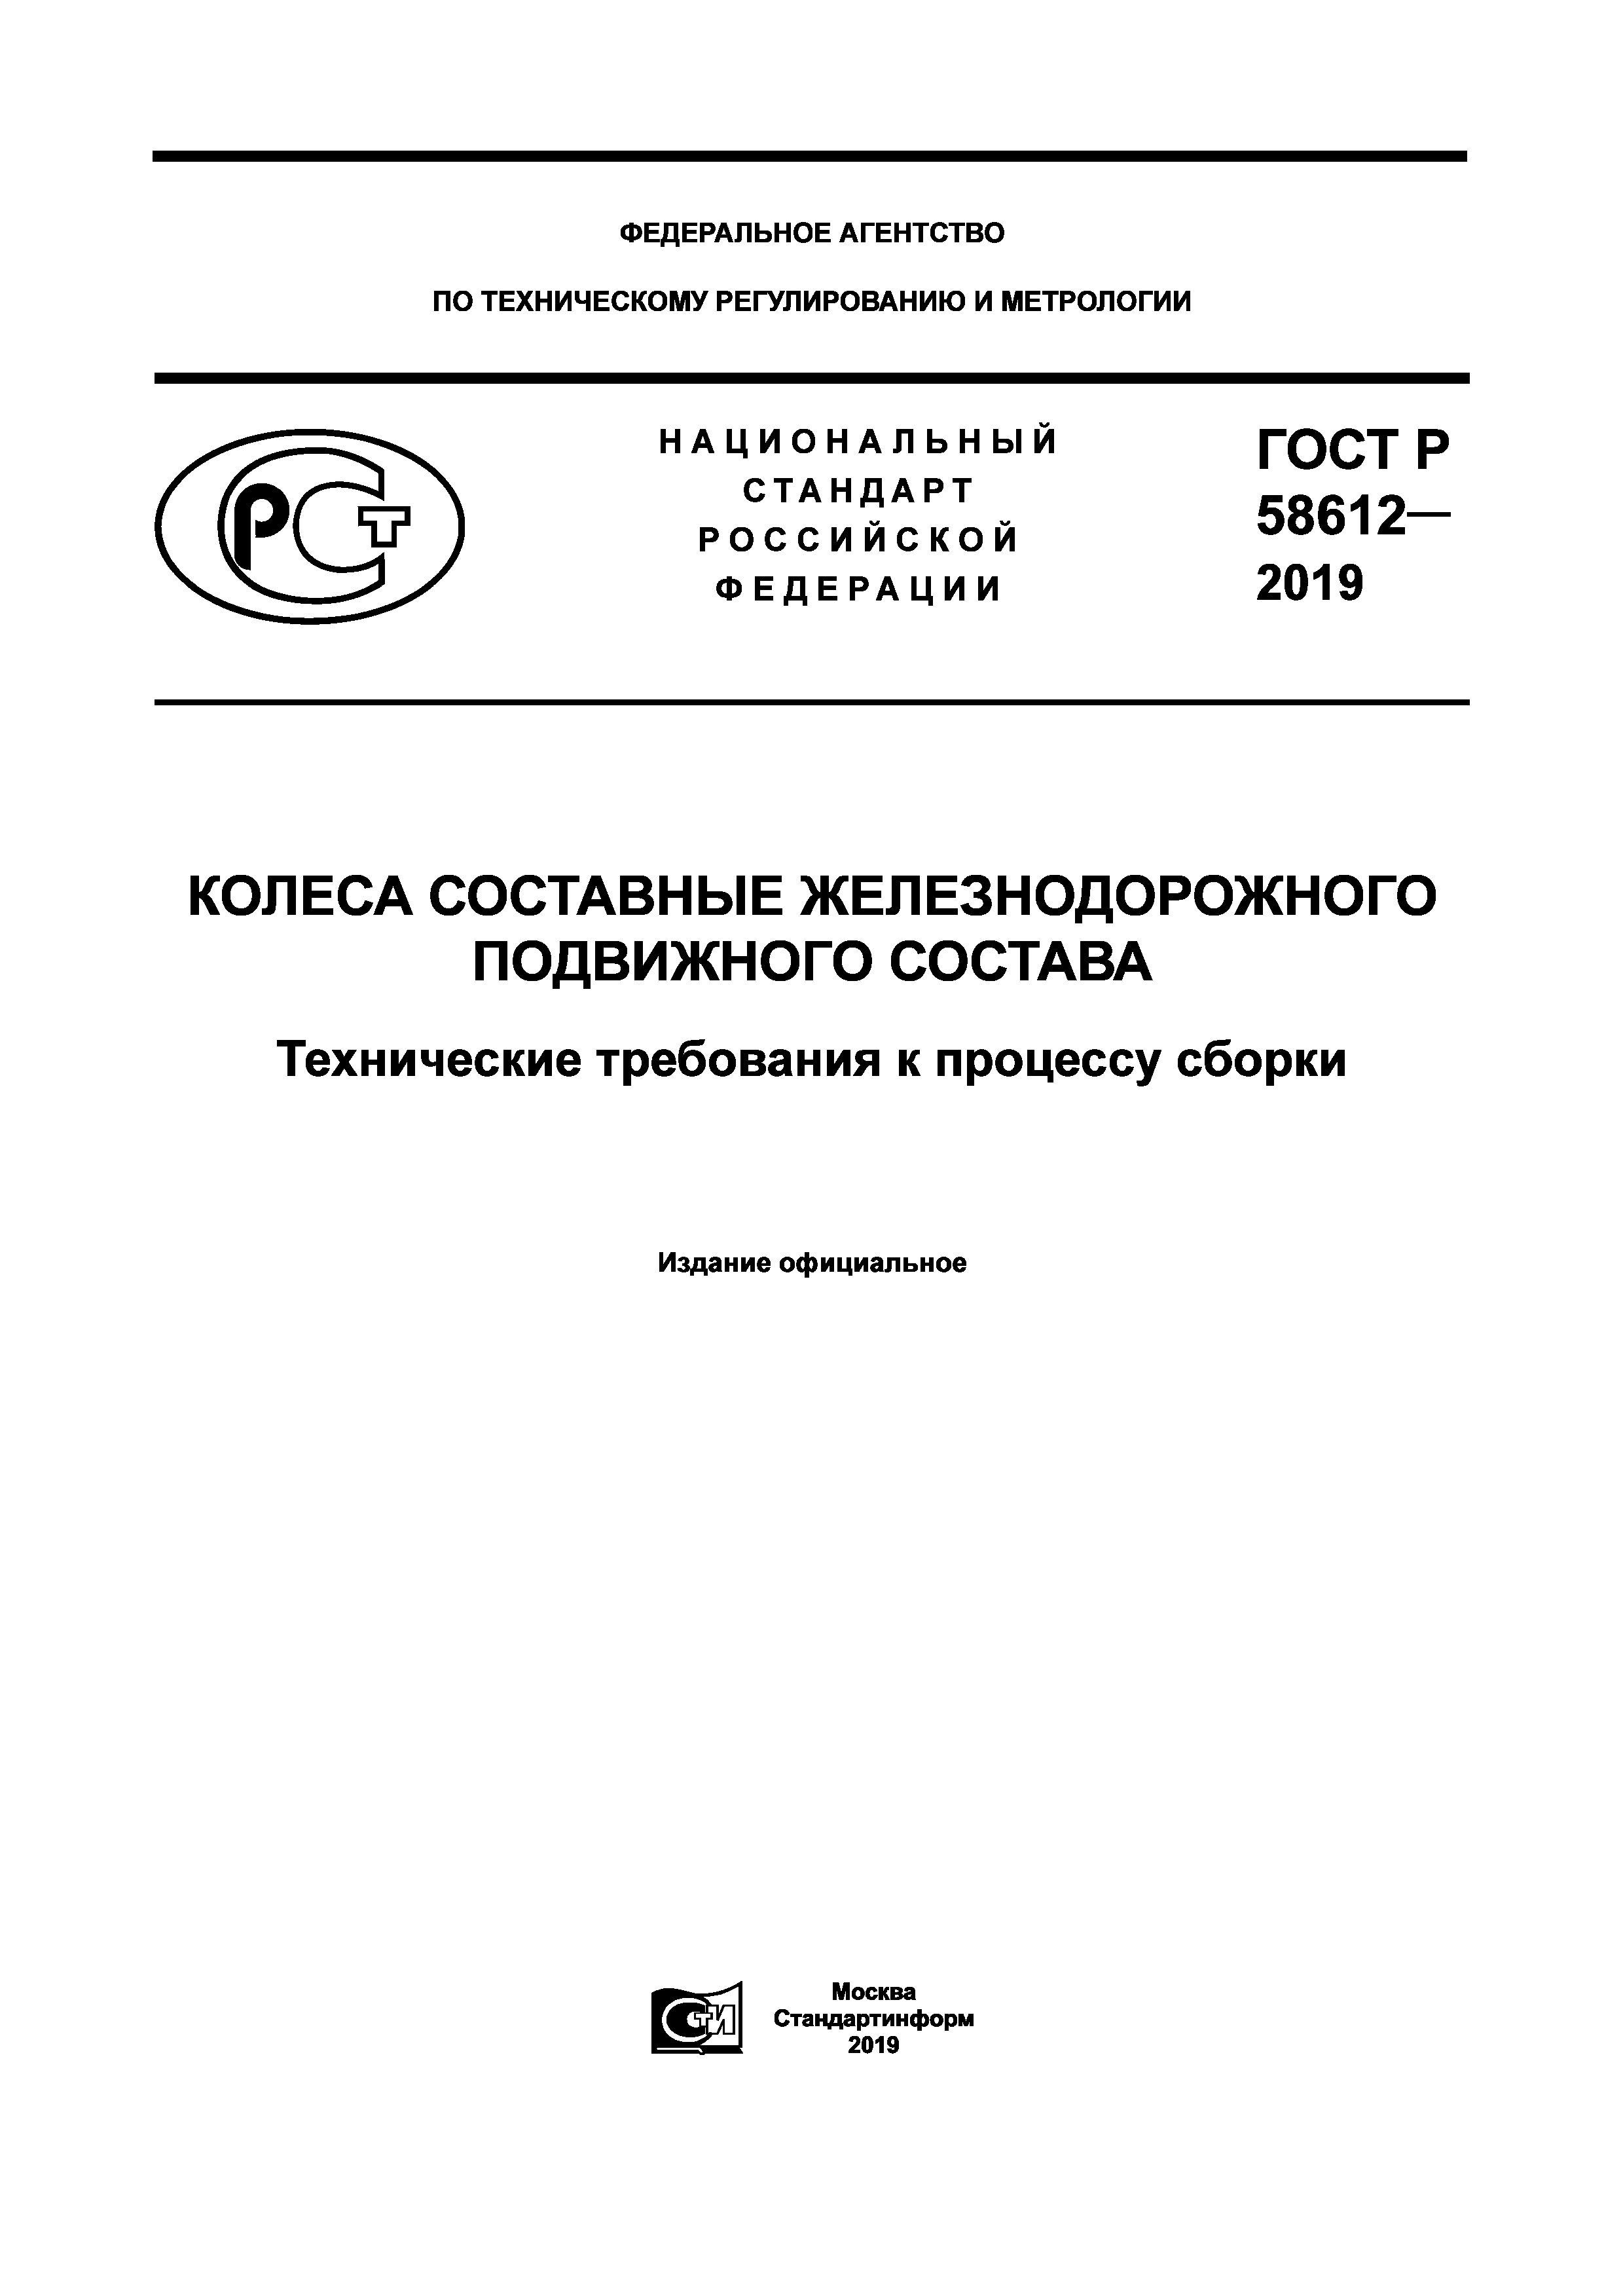 ГОСТ Р 58612-2019